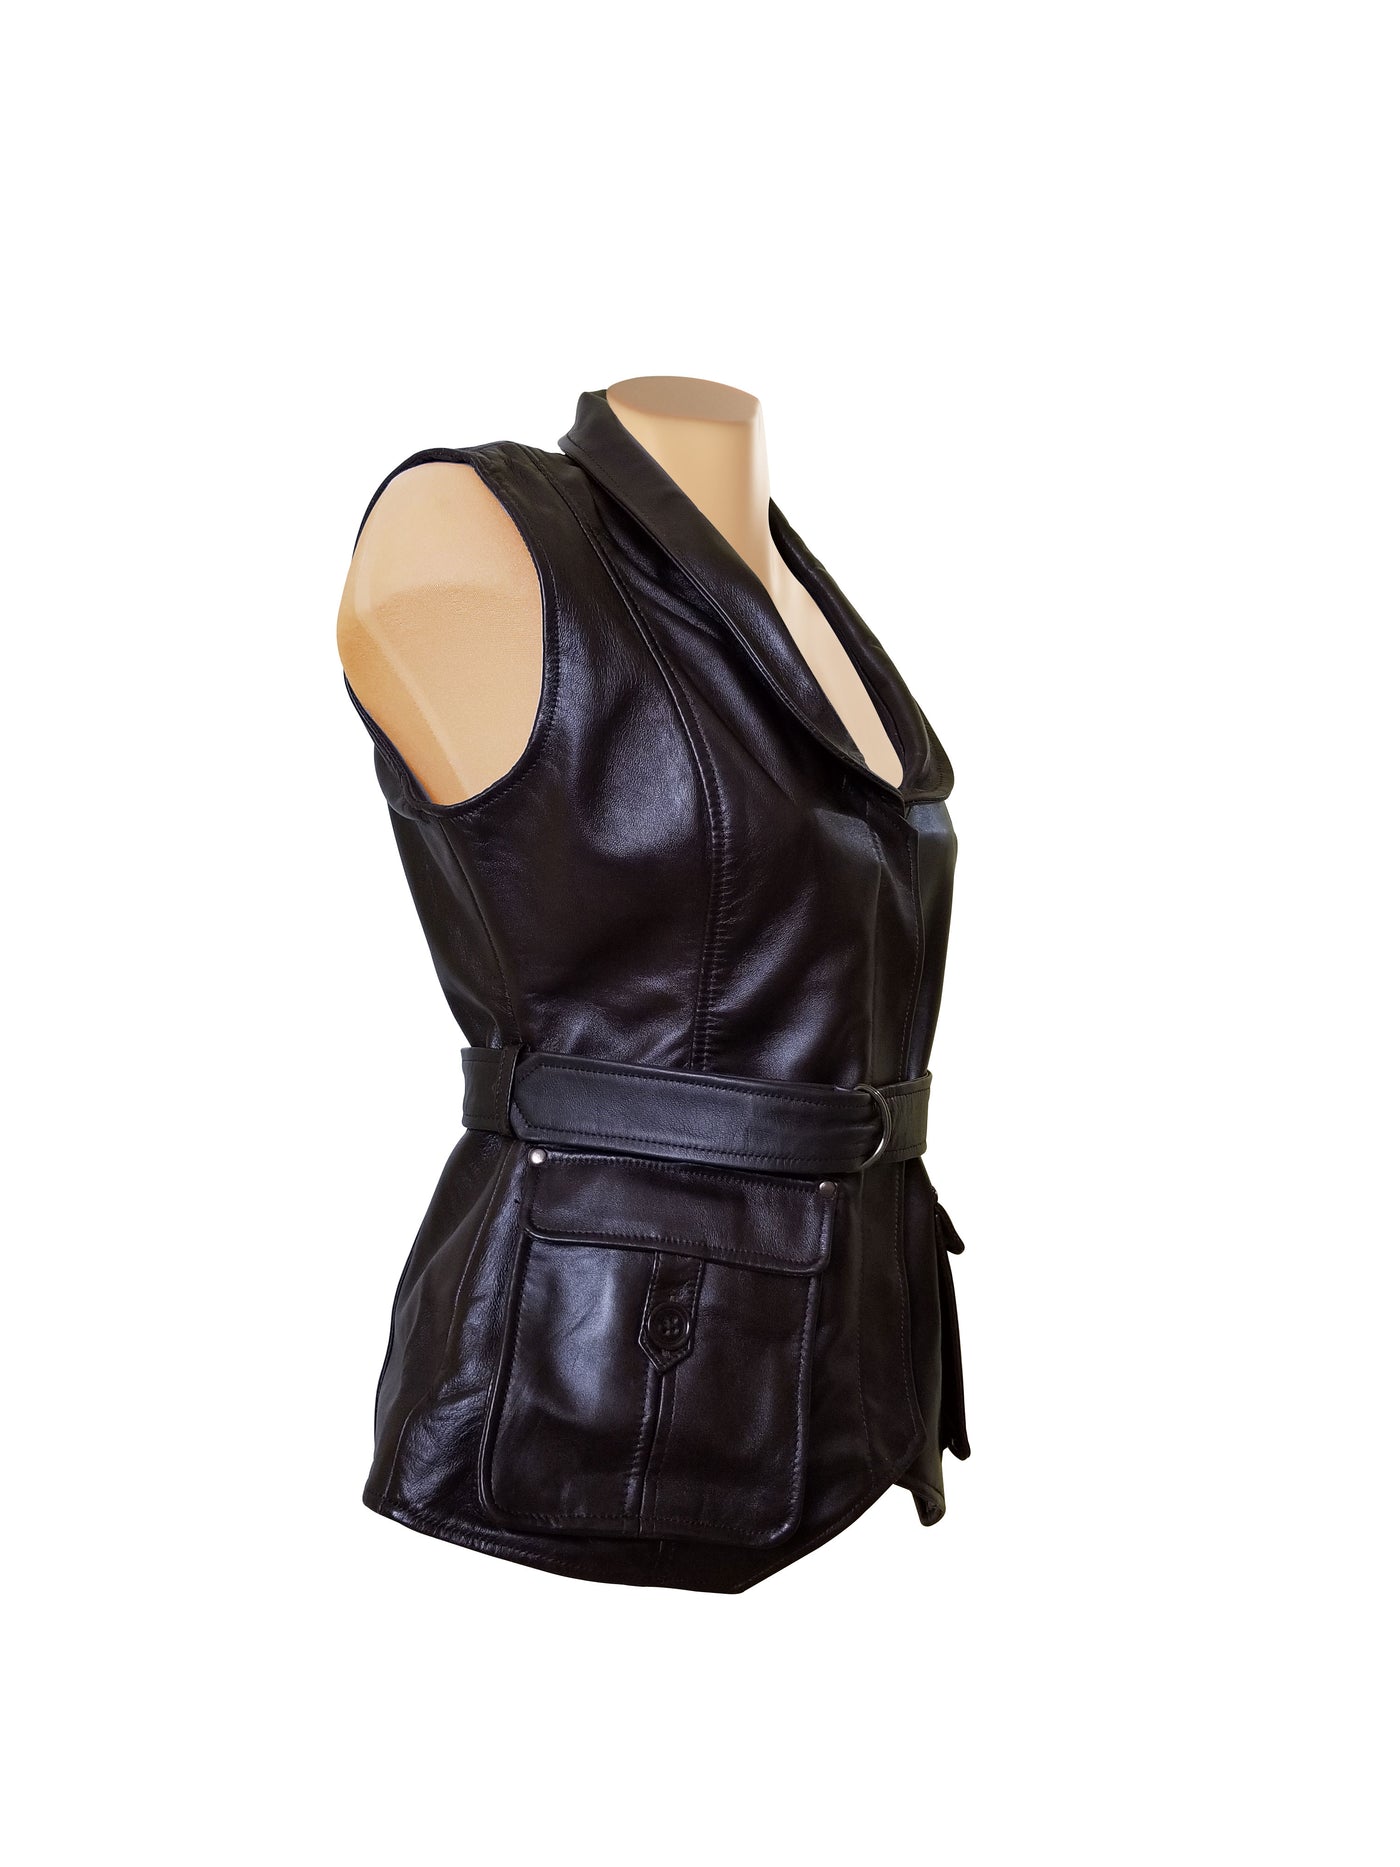 Comfortable Teejays leather vest with waist belt